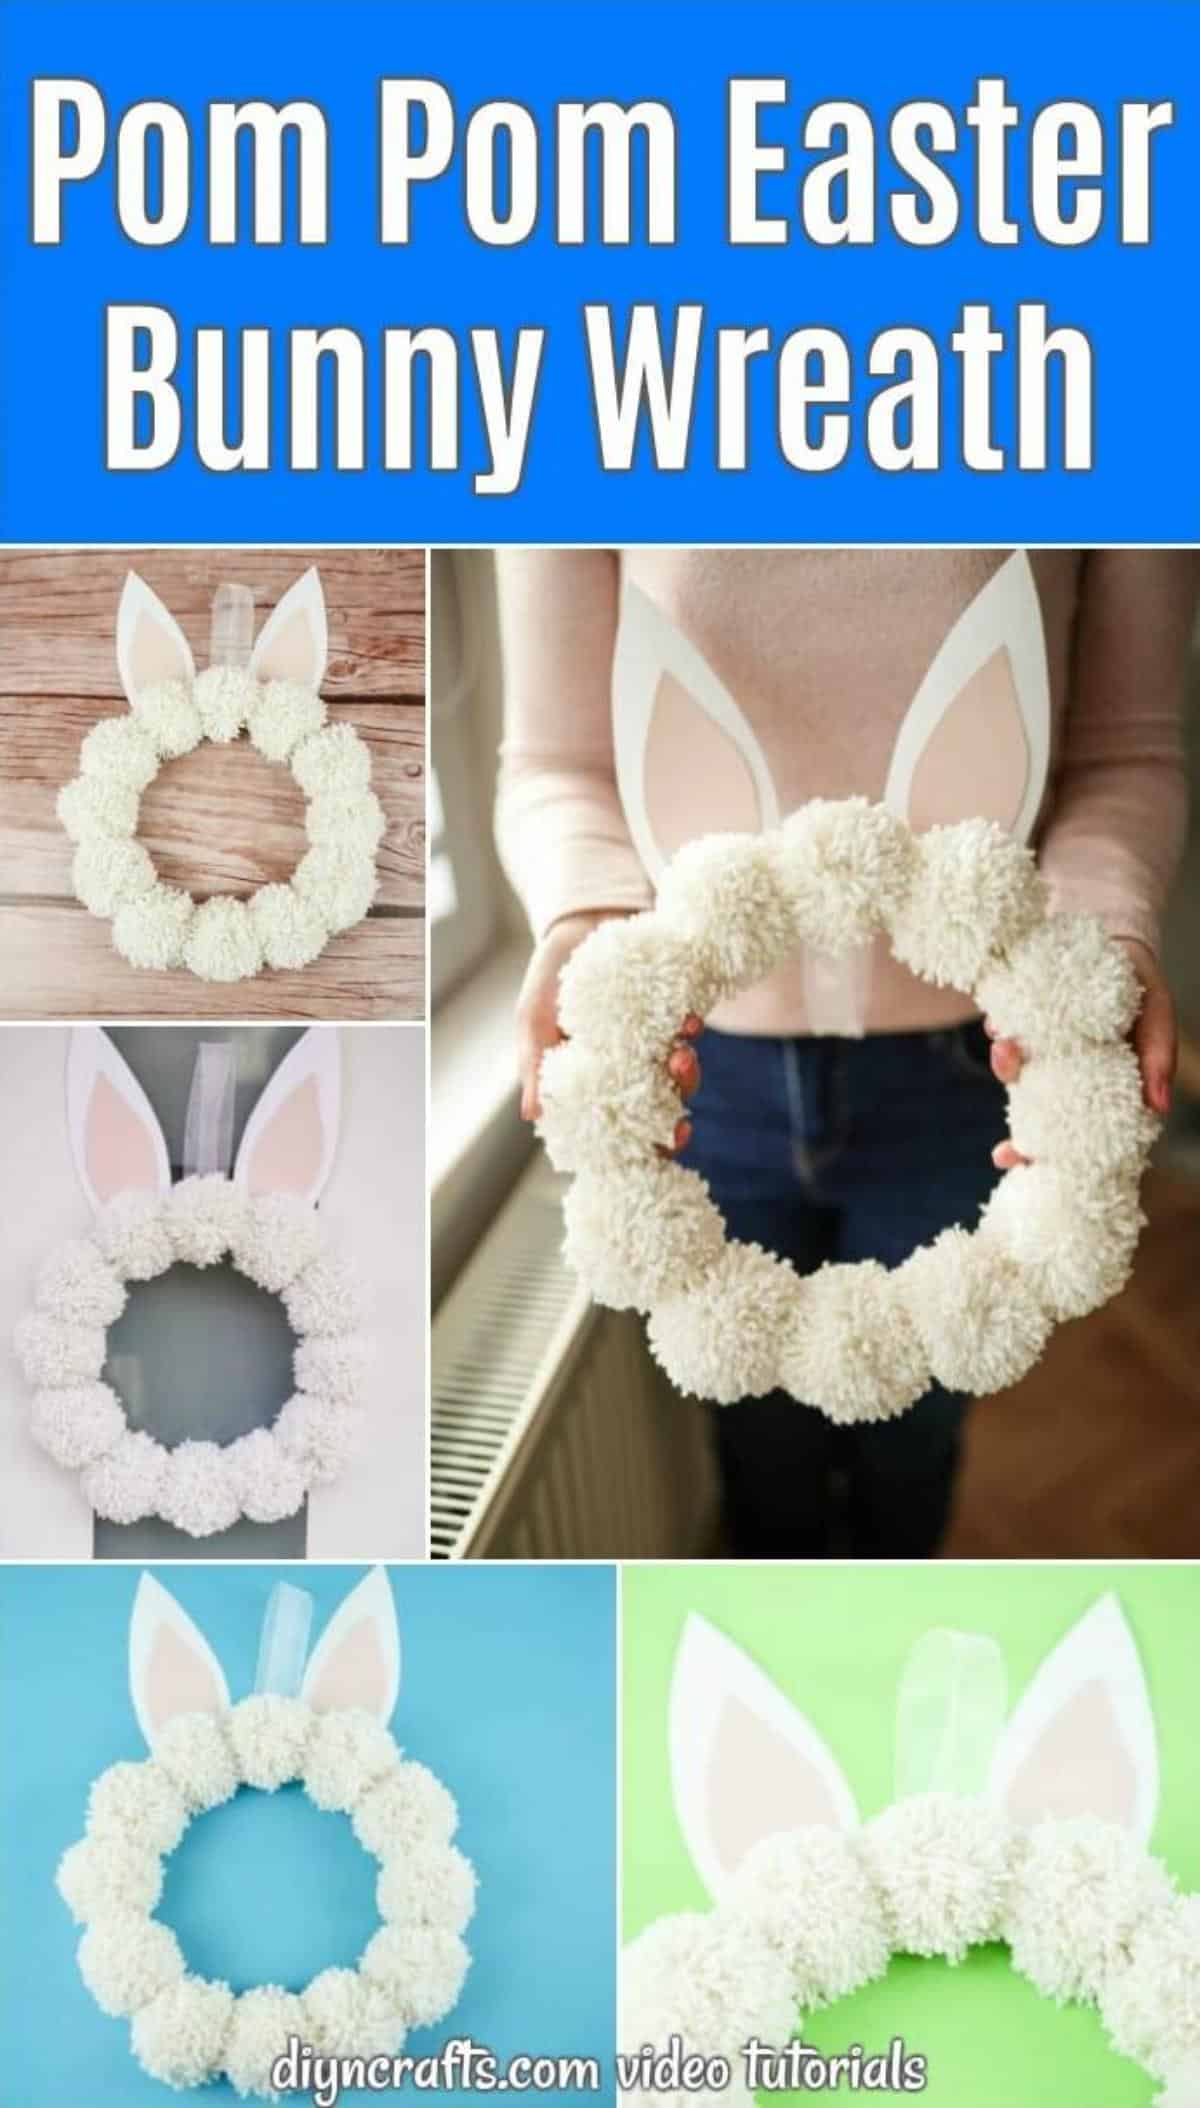 Easy DIY Pom Pom Easter Bunny Wreath pinterest image.